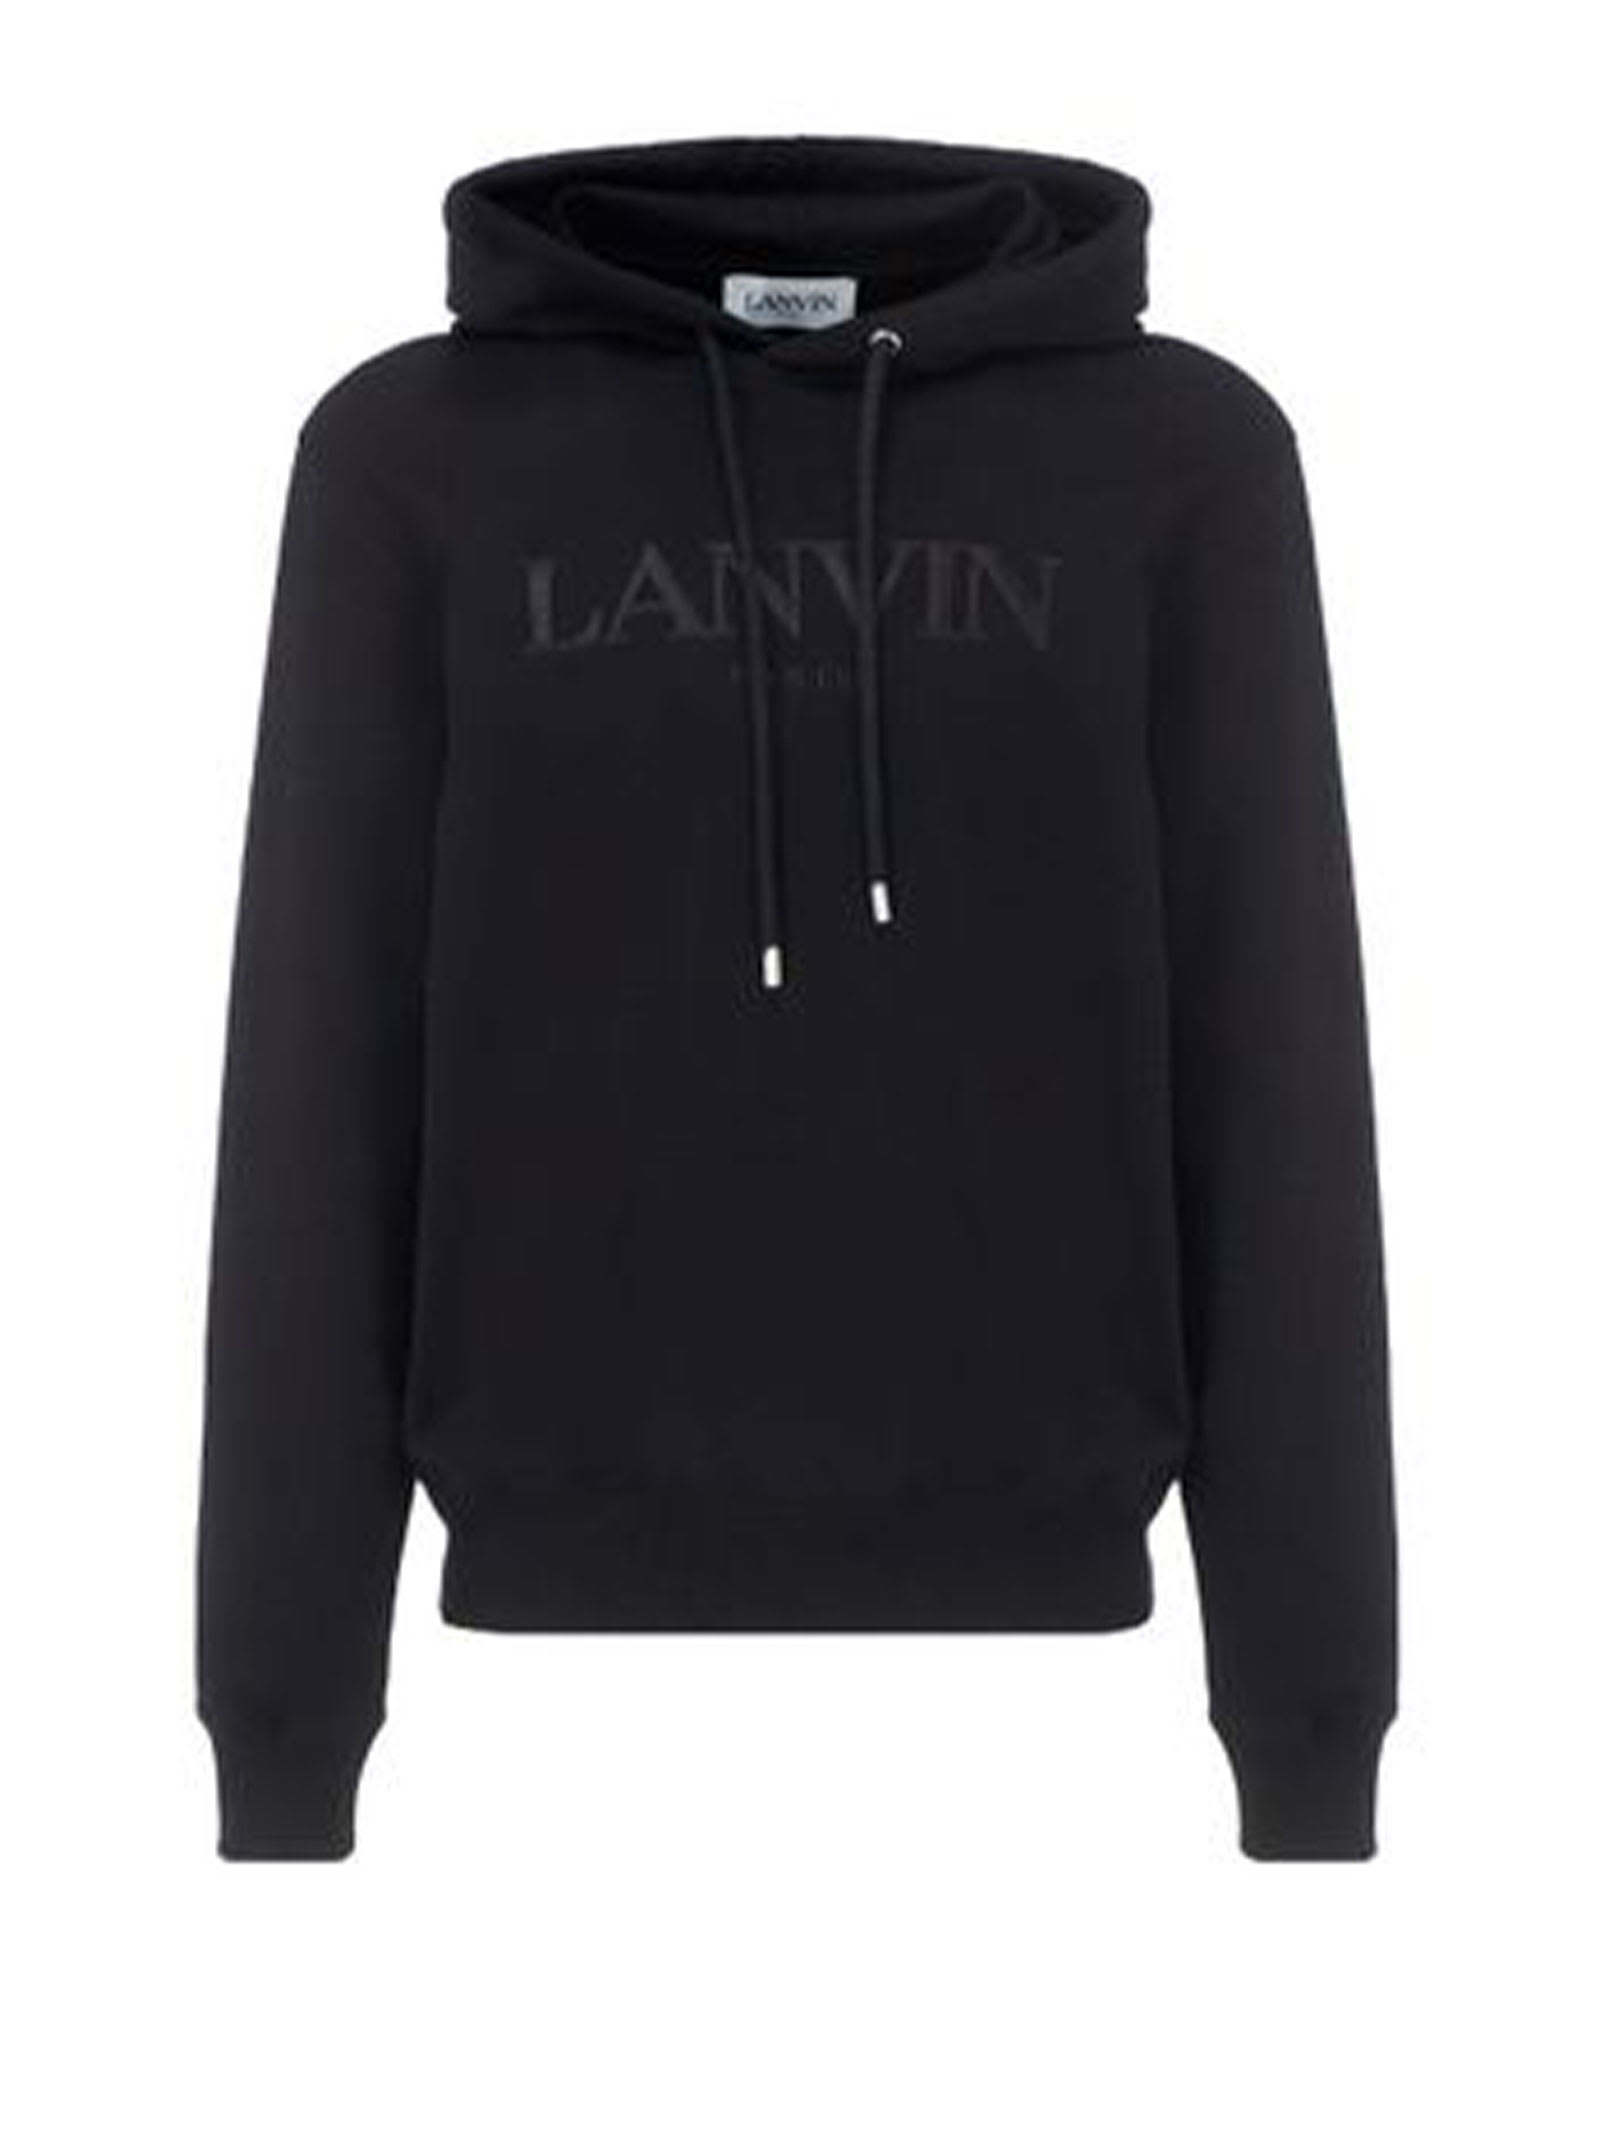 Lanvin Hoodie In Black Cotton